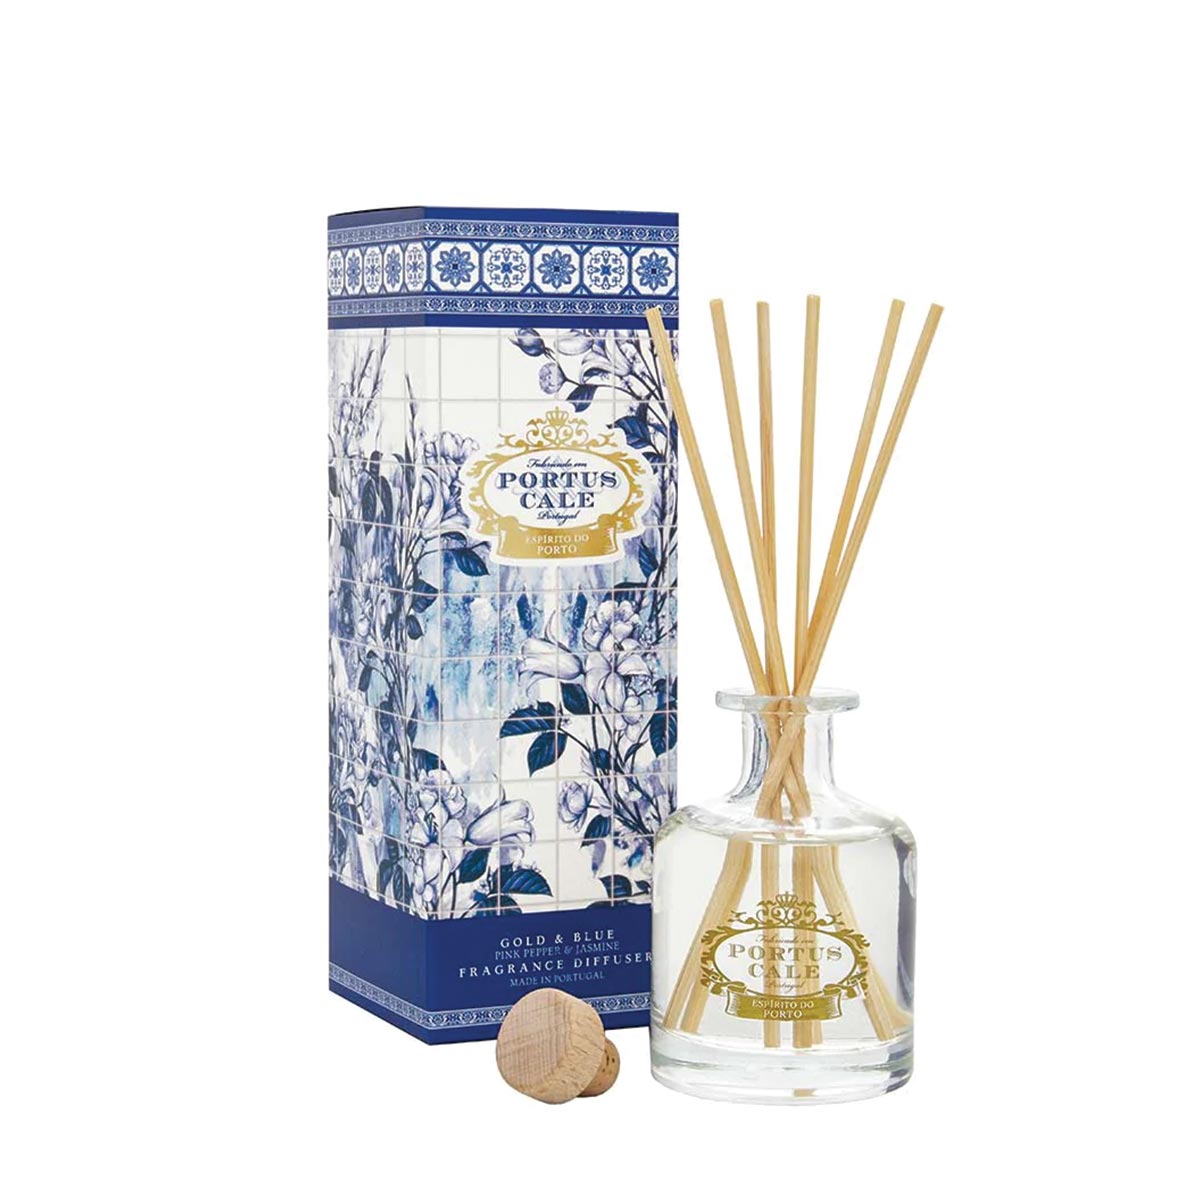 Castelbel Portus Cale Gold & Blue Fragrance Diffuser - 100Ml